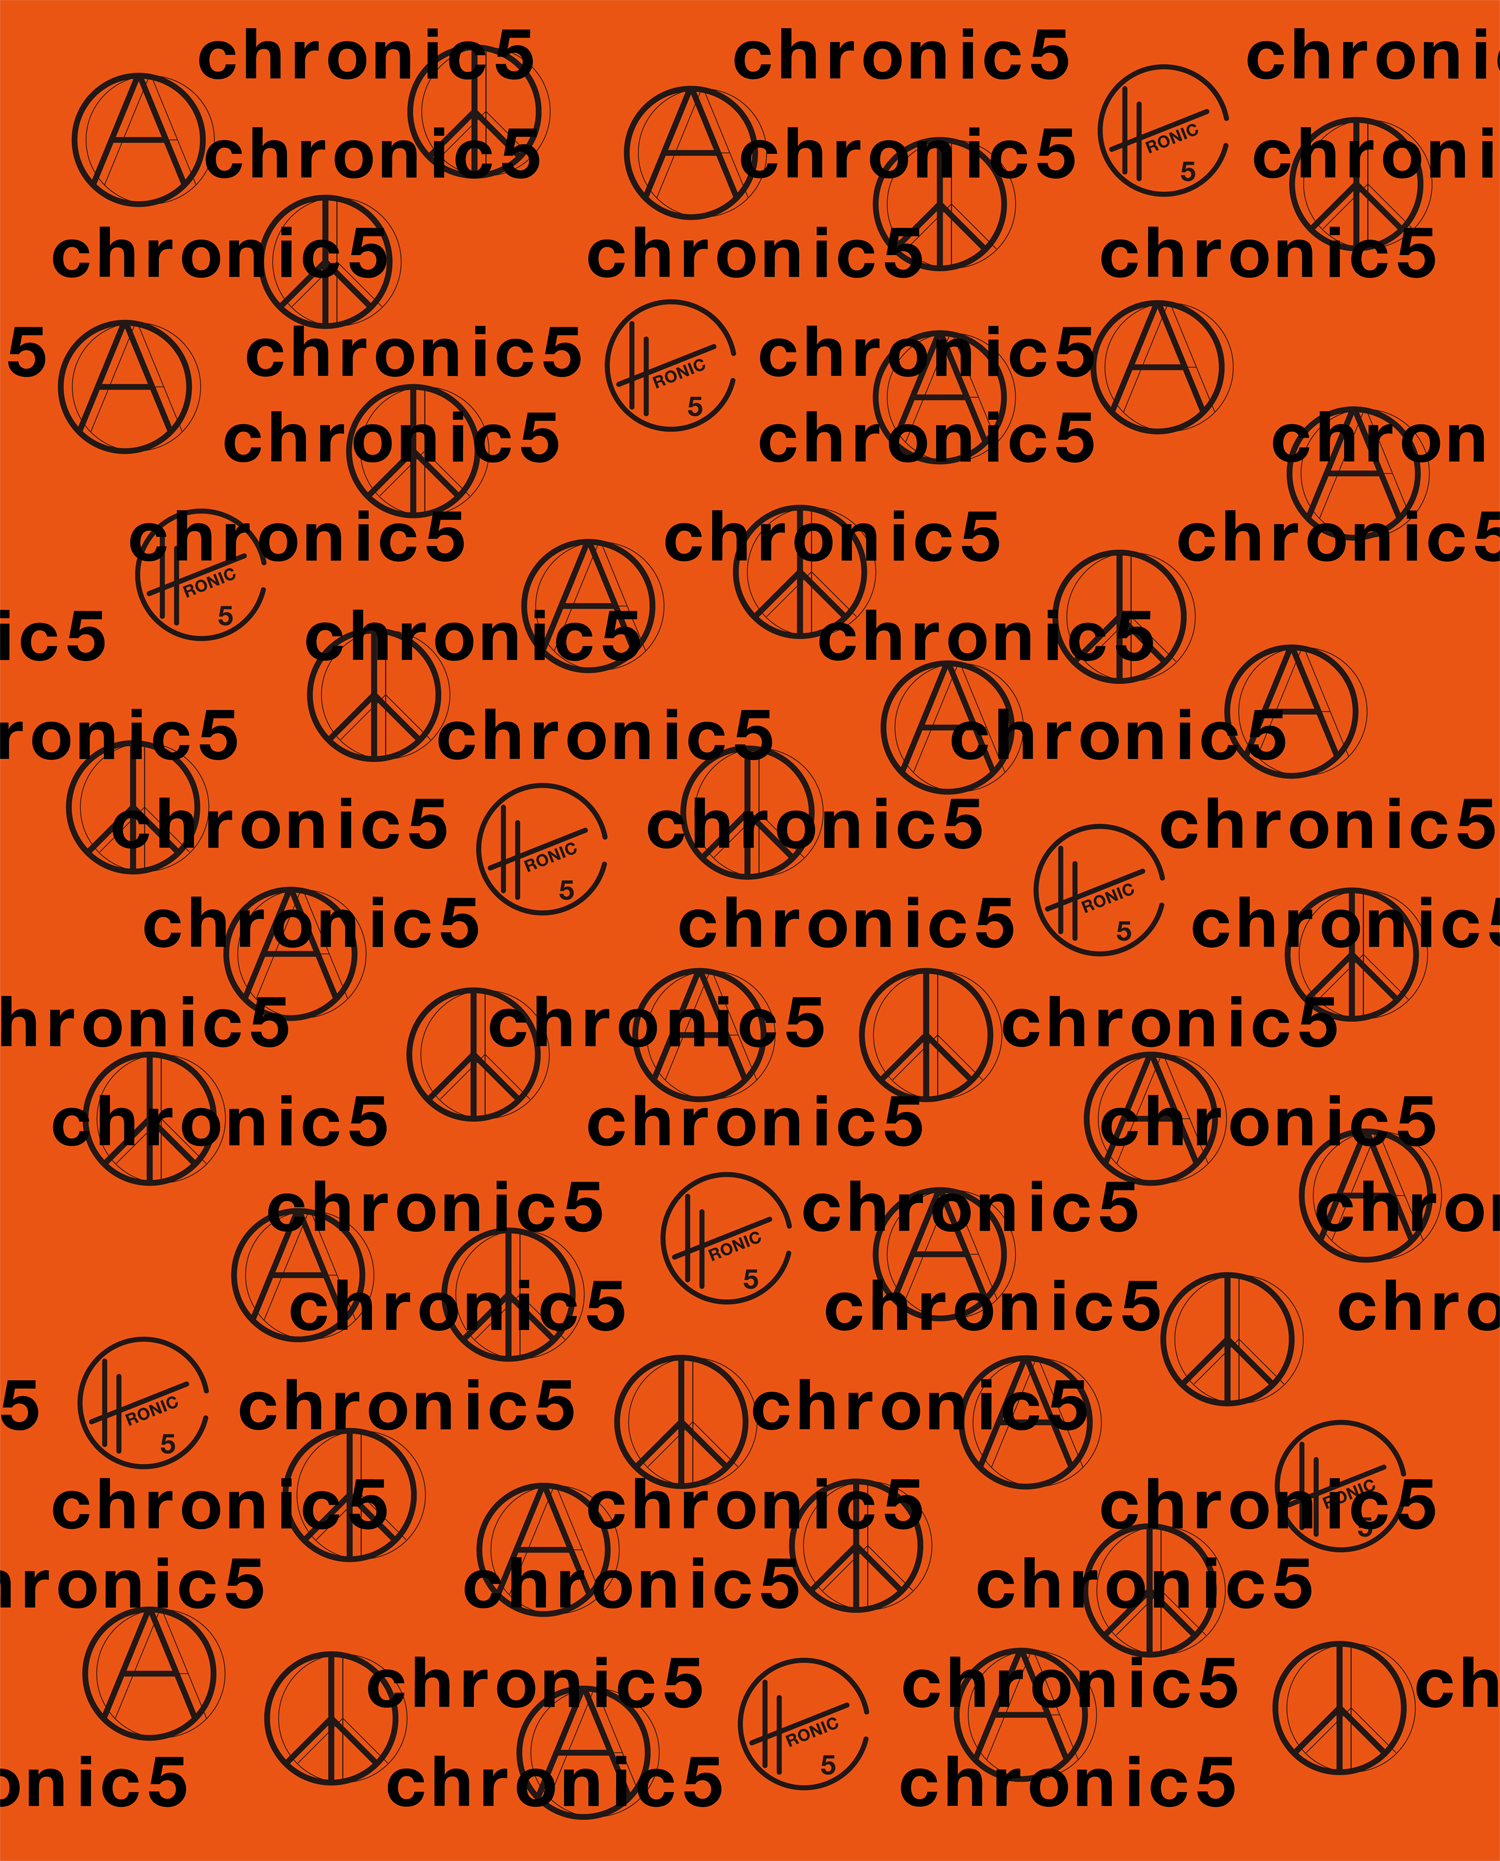 chronic5 by chronic5